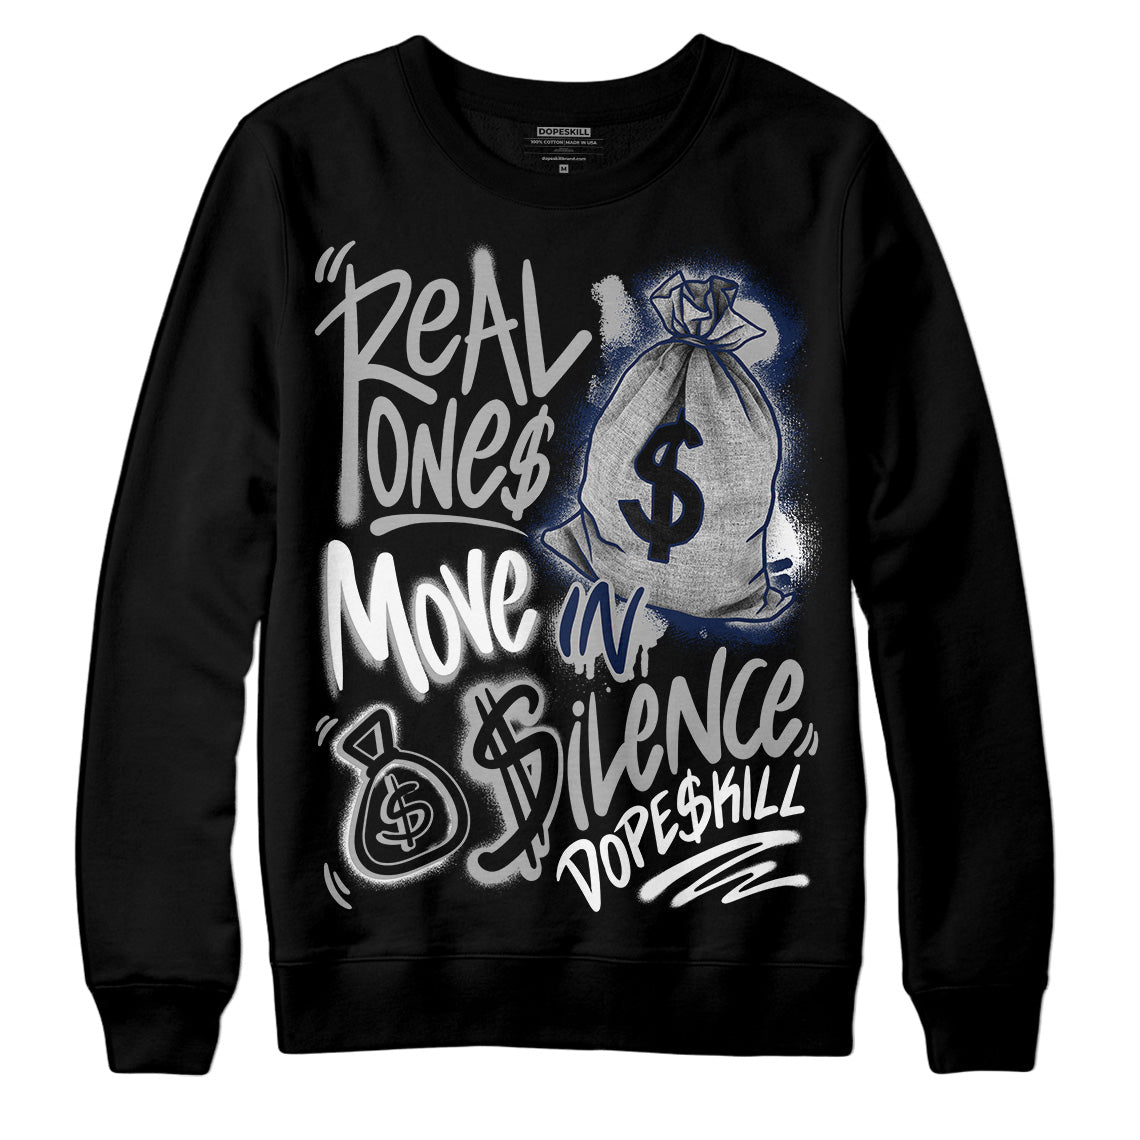 Jordan 4 Midnight Navy DopeSkill Sweatshirt Real Ones Move In Silence Graphic Streetwear - Black